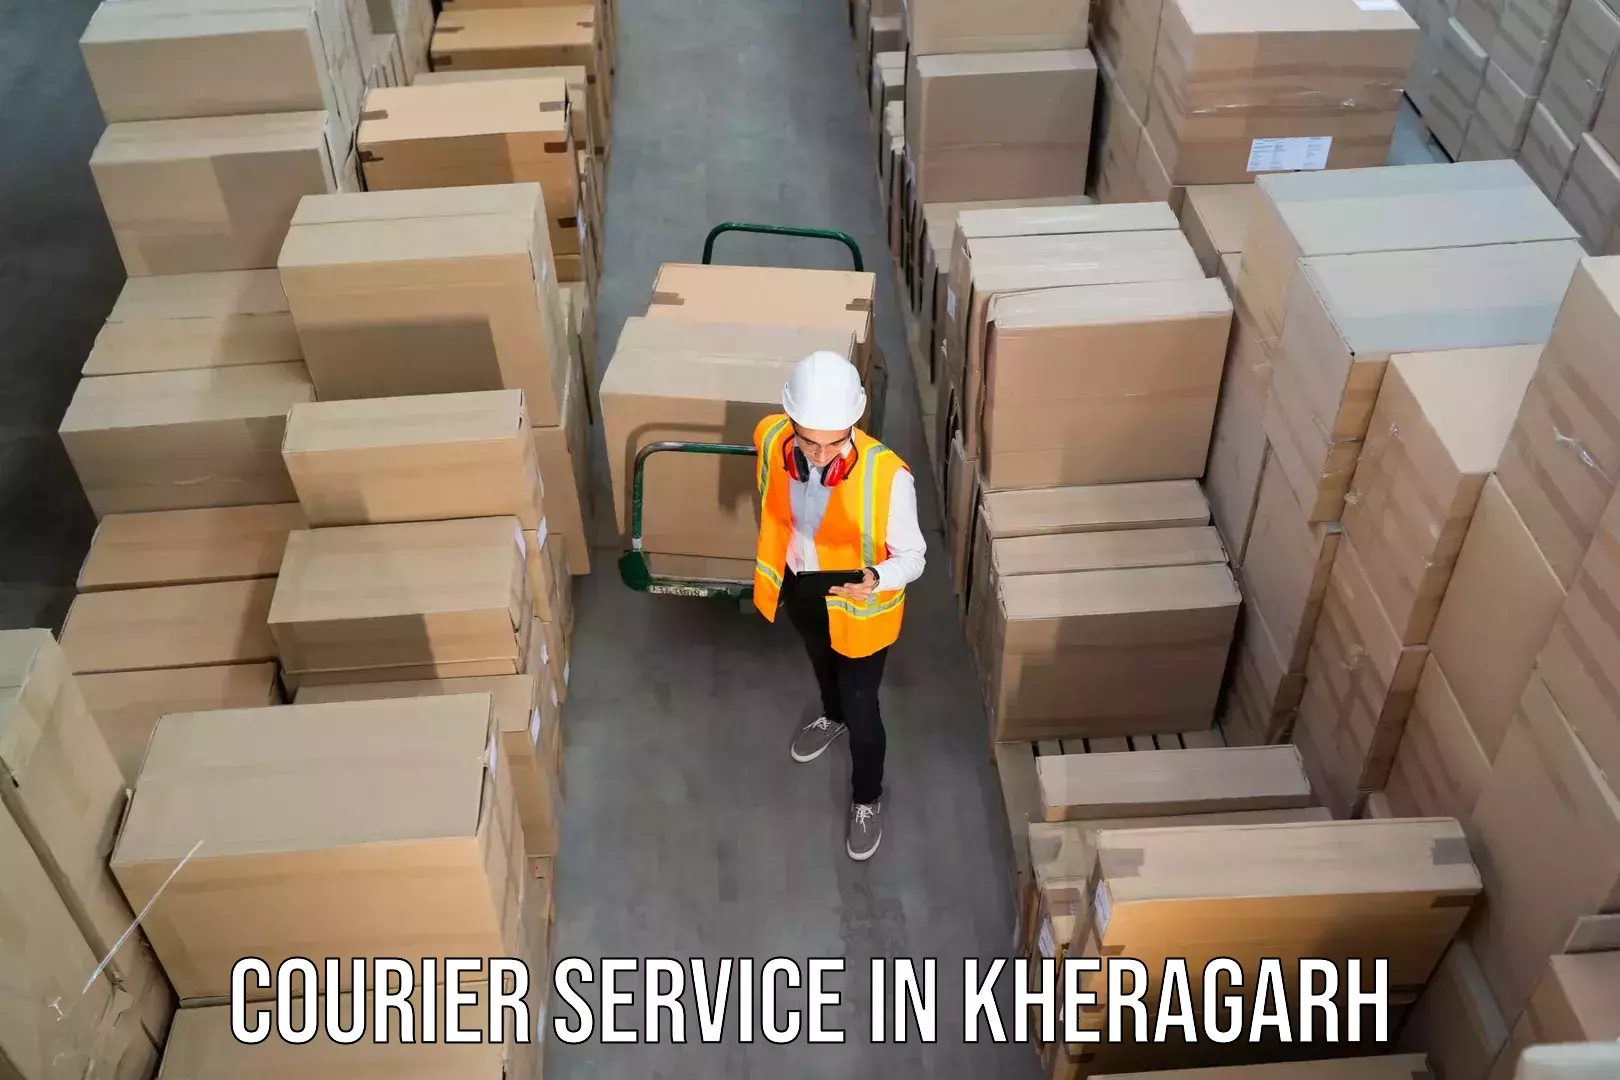 Affordable international shipping in Kheragarh